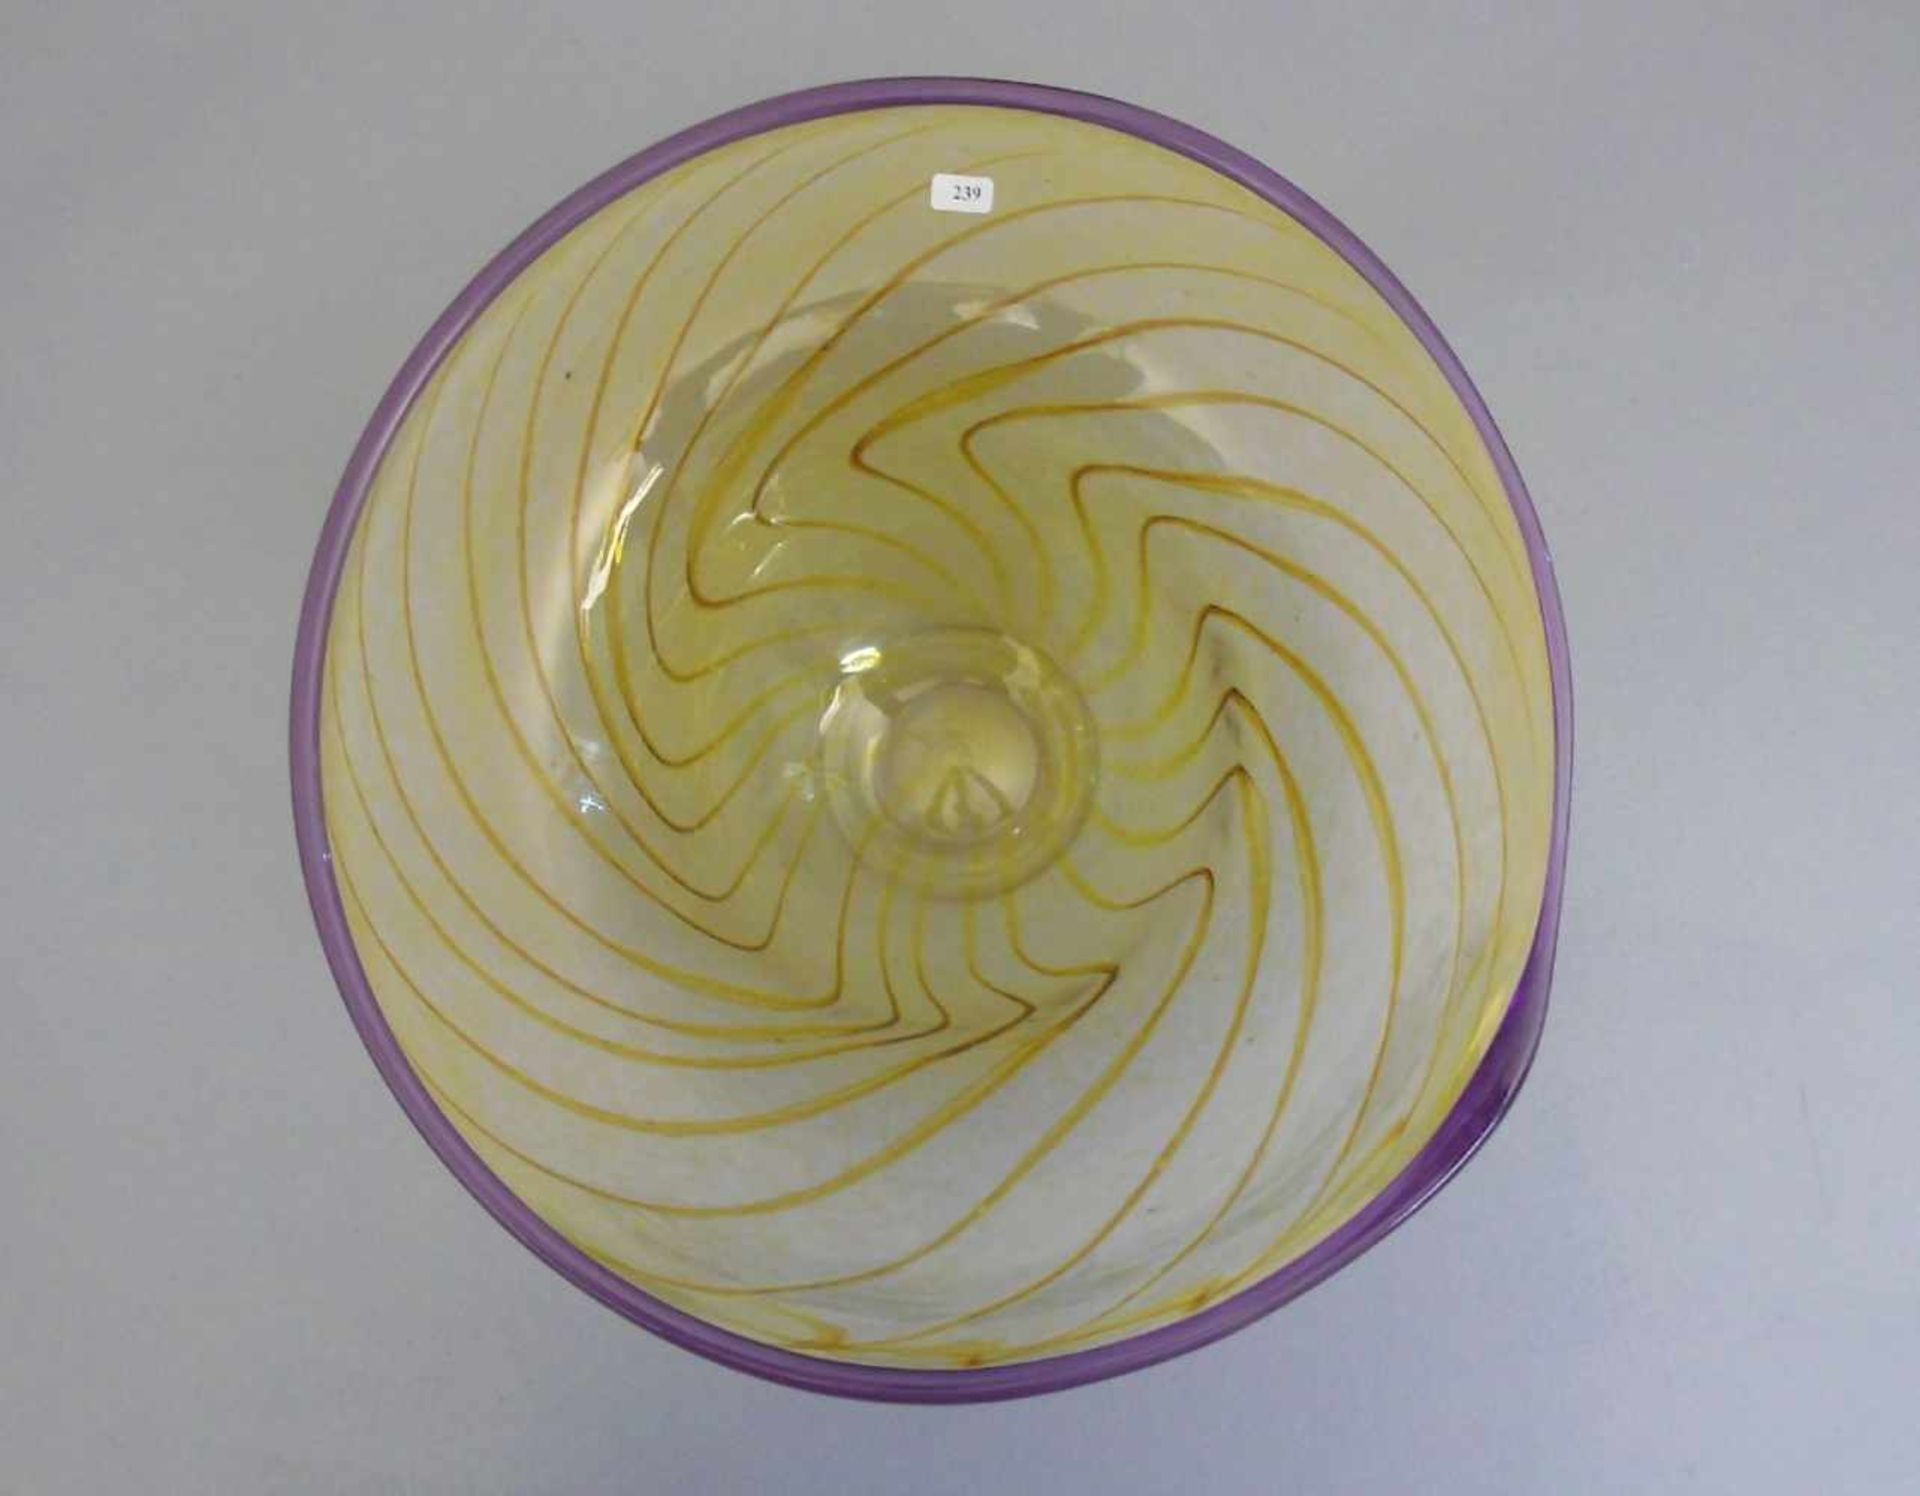 GLASSCHALE / bowl, unter dem Stand Nadelsignatur "P. Kemp" oder "P. Kem R" und datiert "97" ( - Image 2 of 2